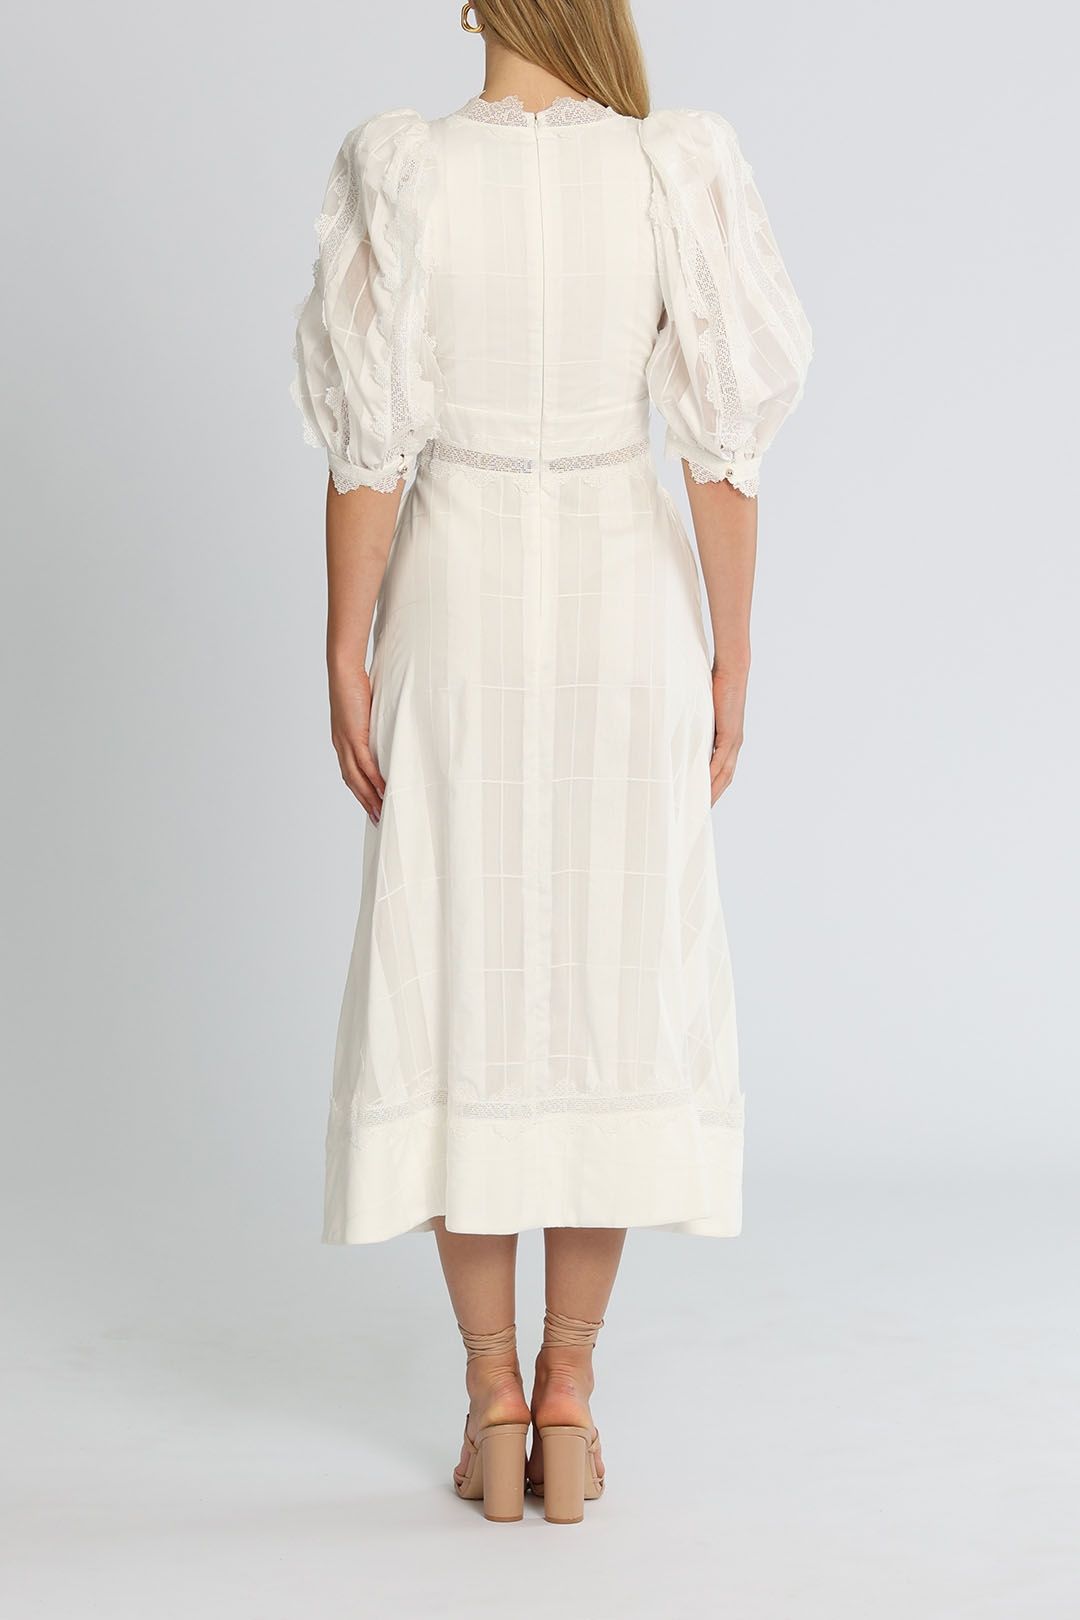 Acler Grampian Dress White